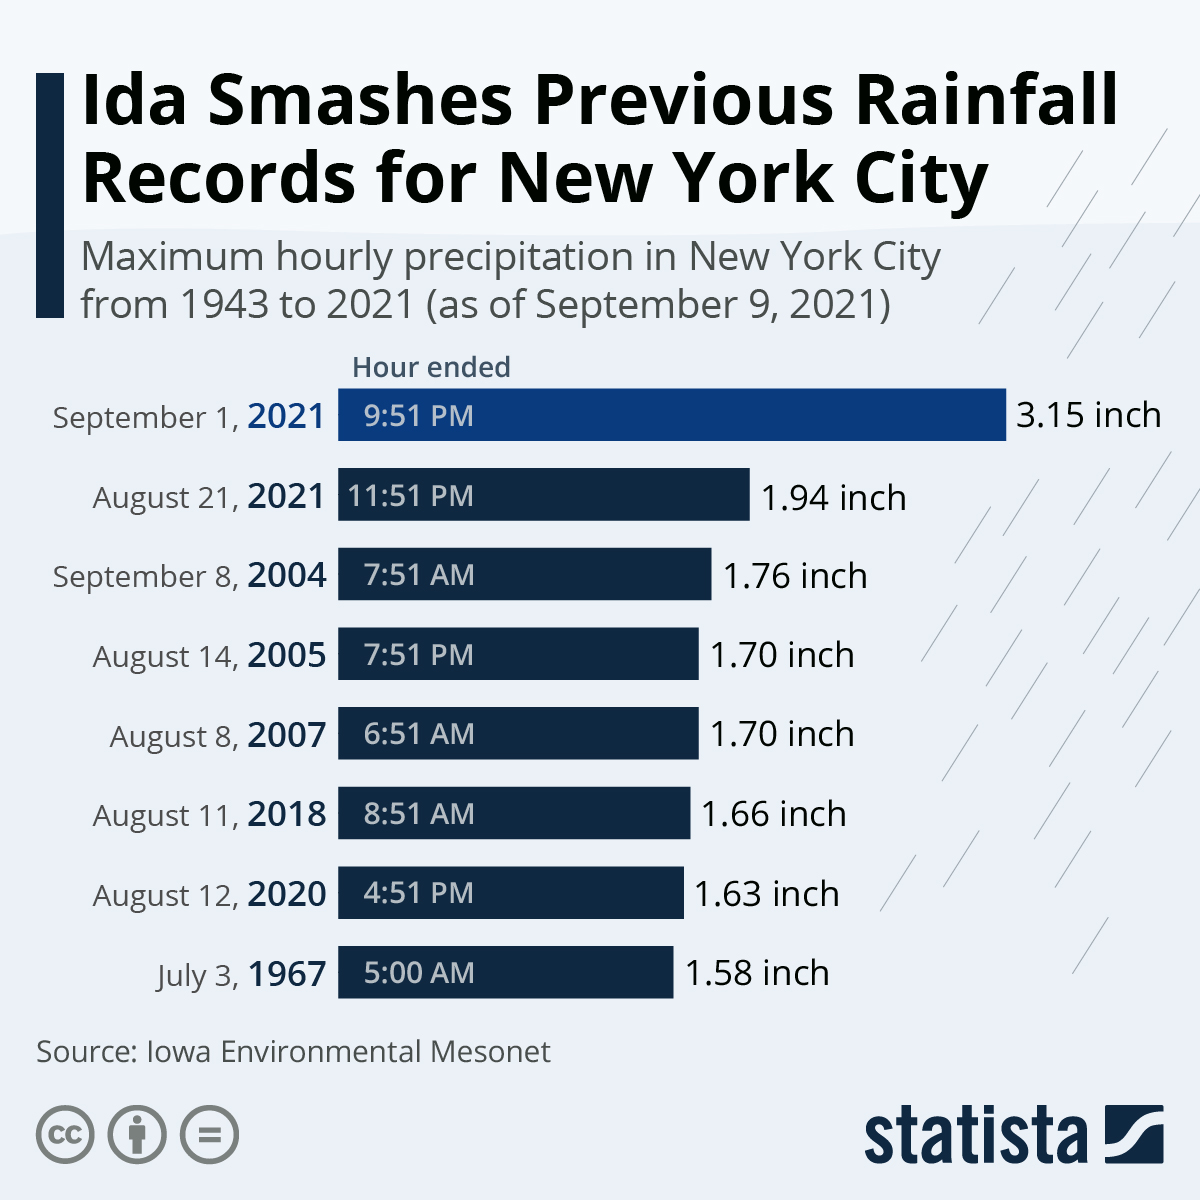 Ida Smashes Previous Rainfall Records for New York City